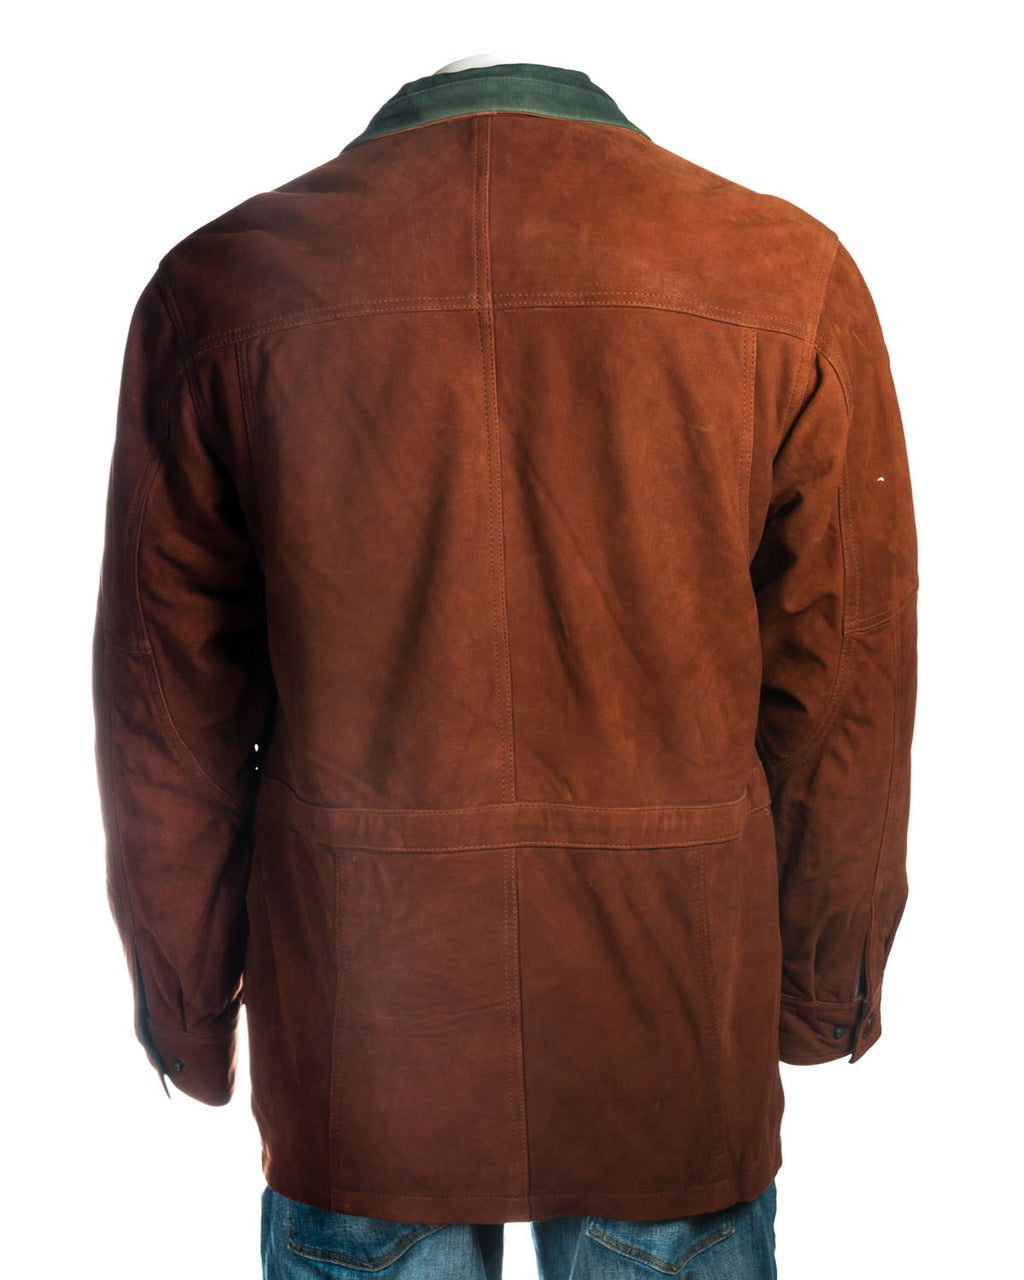 Men's Tan And Teal Nubuck Coat with Zipped Pockets: Fernando